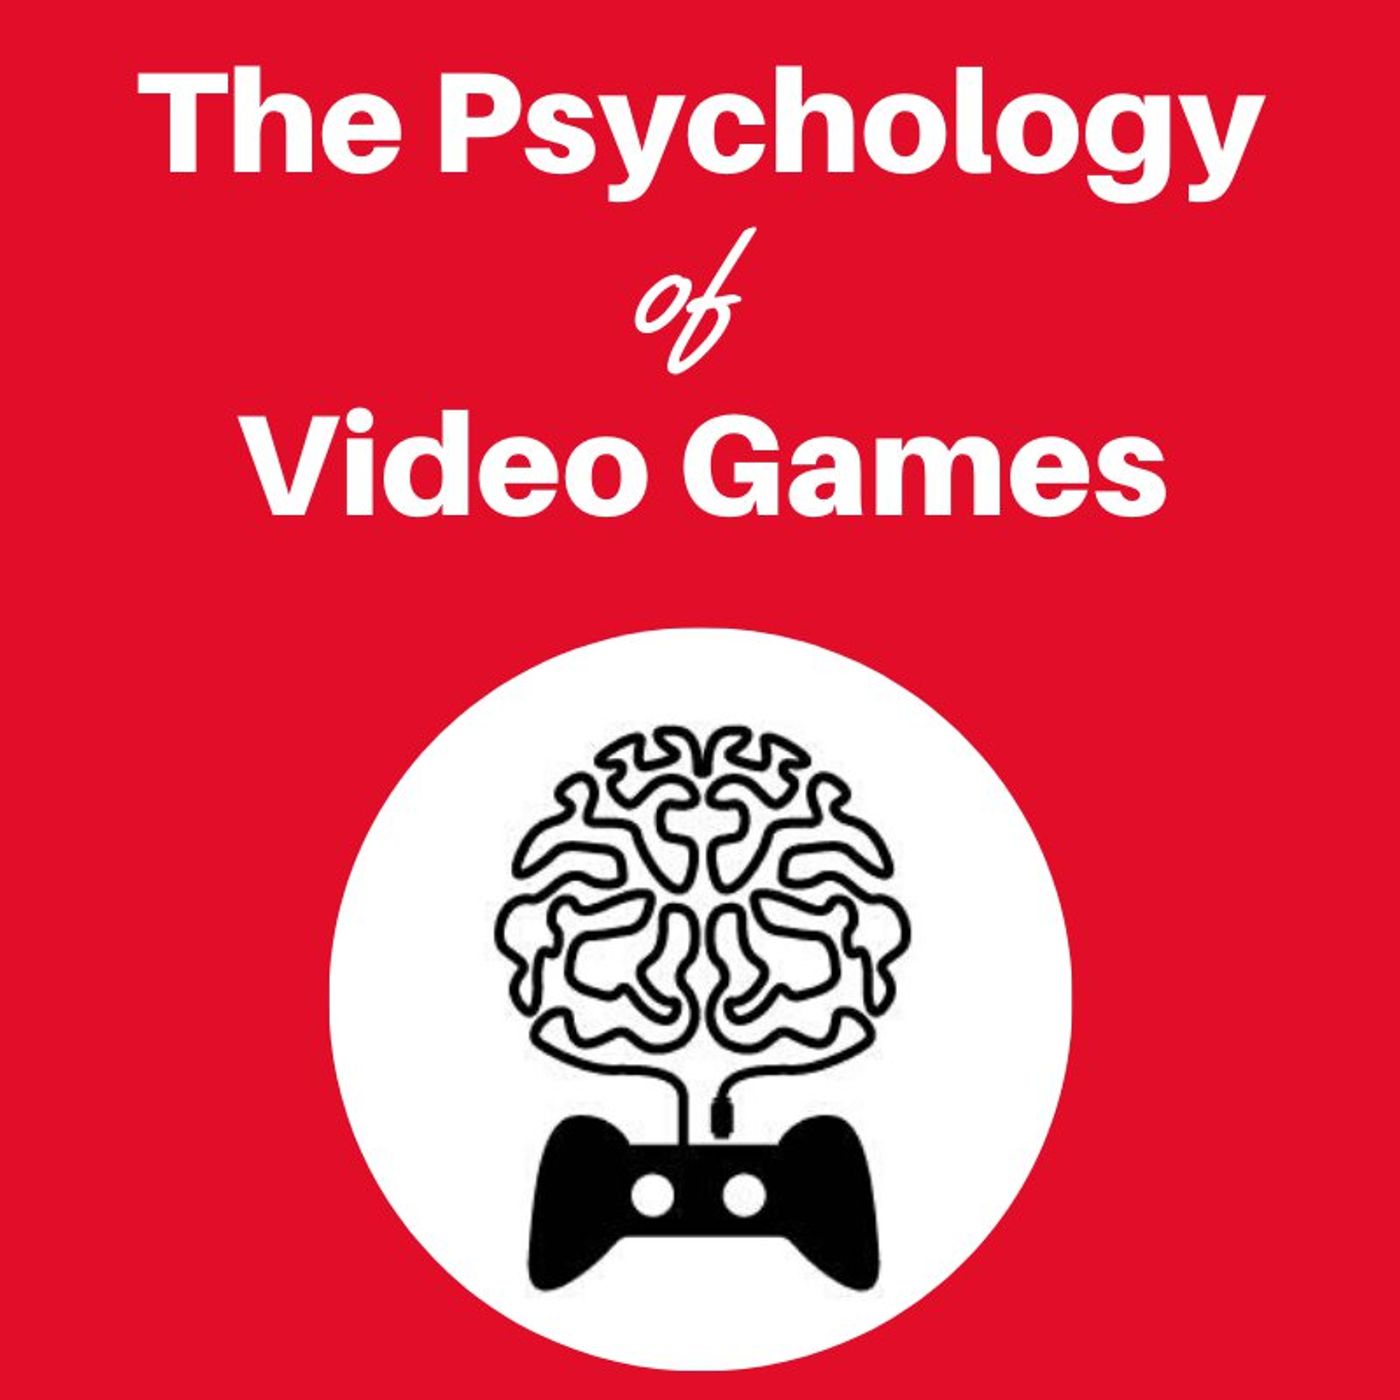 Episode 58 - The Economics of Online Games